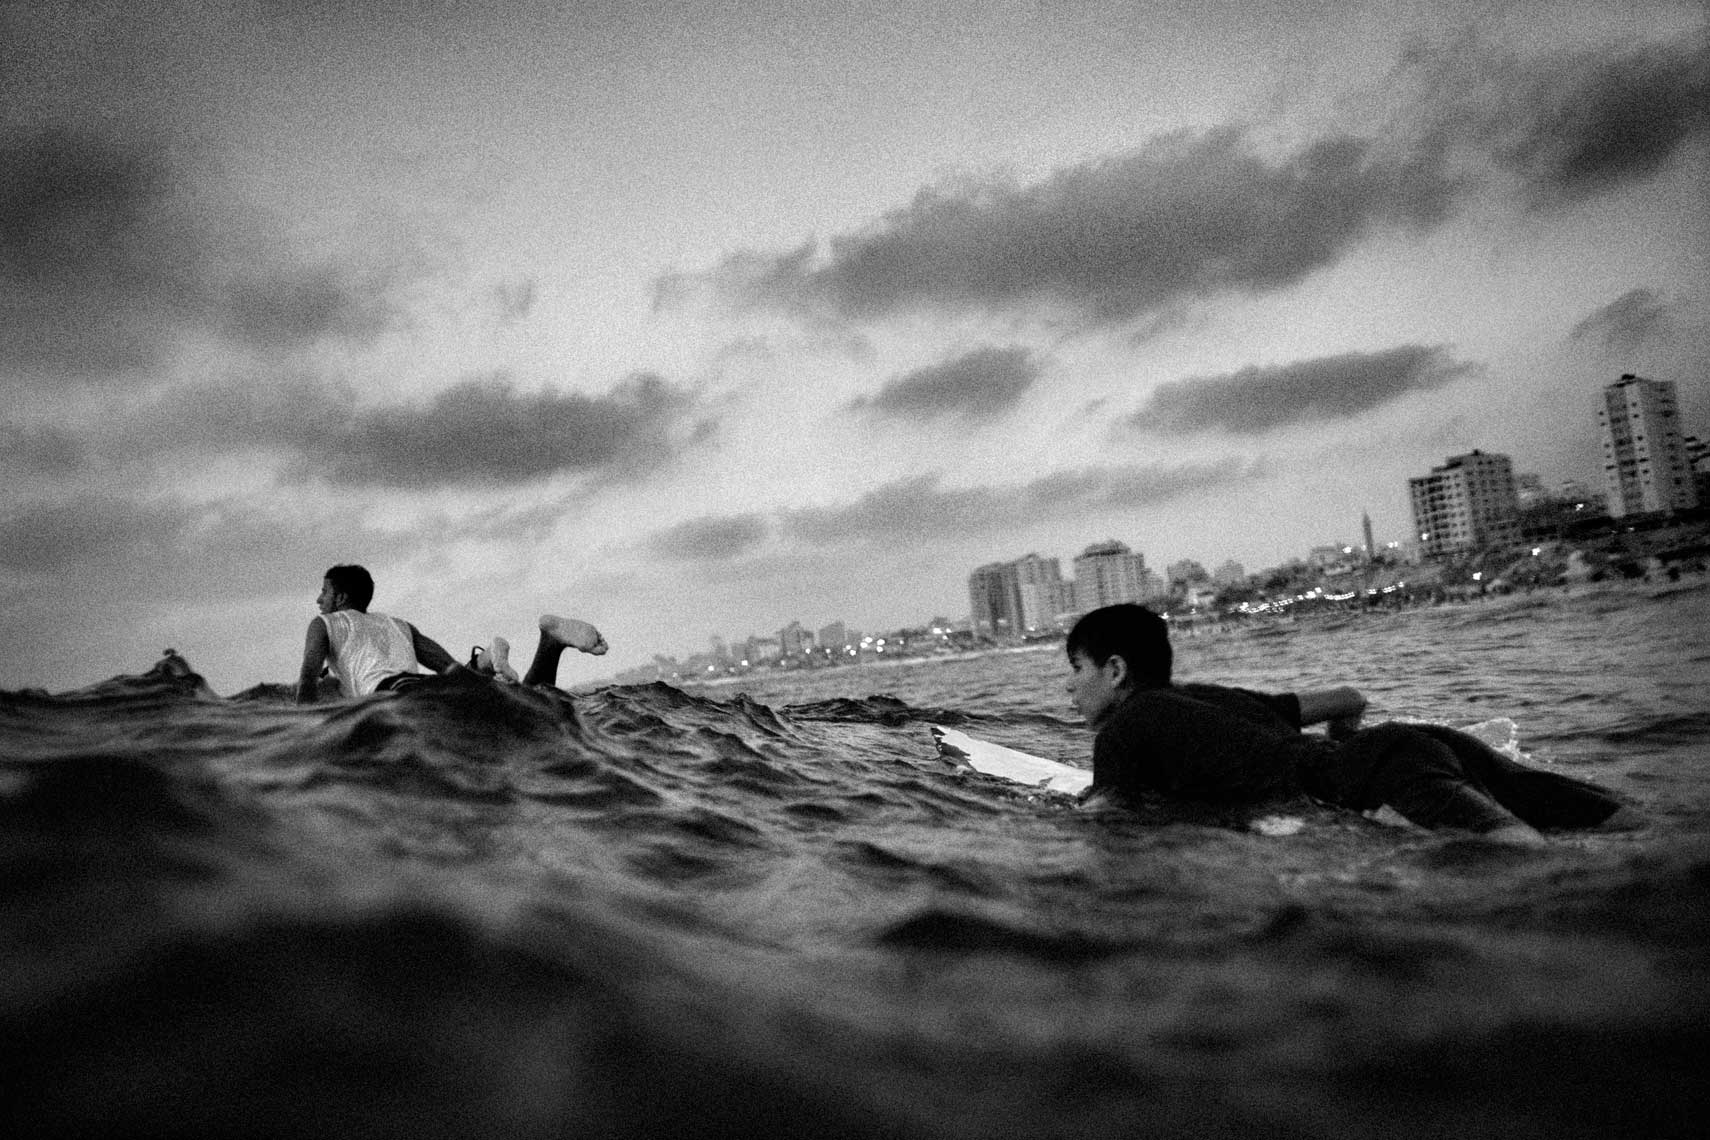 Gaza Surfers